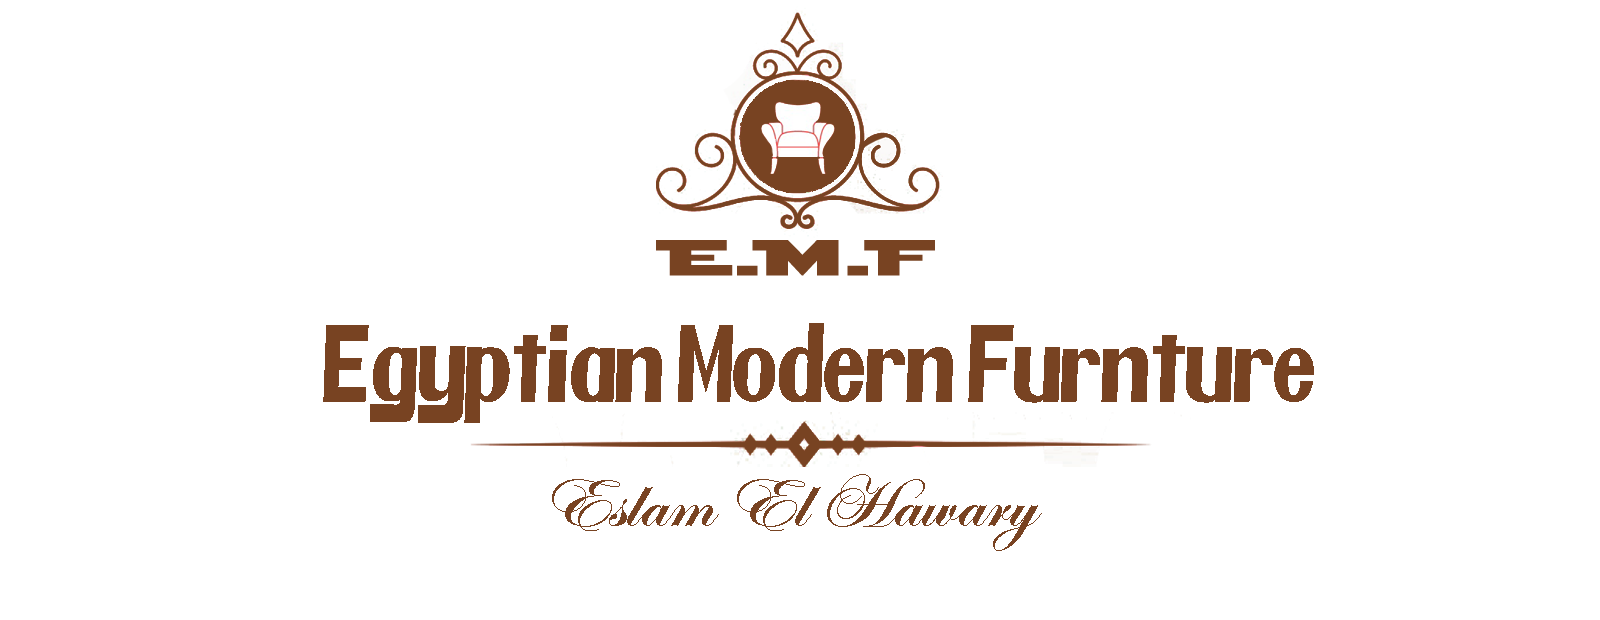 Egyptian Modern Furniture (EMF)